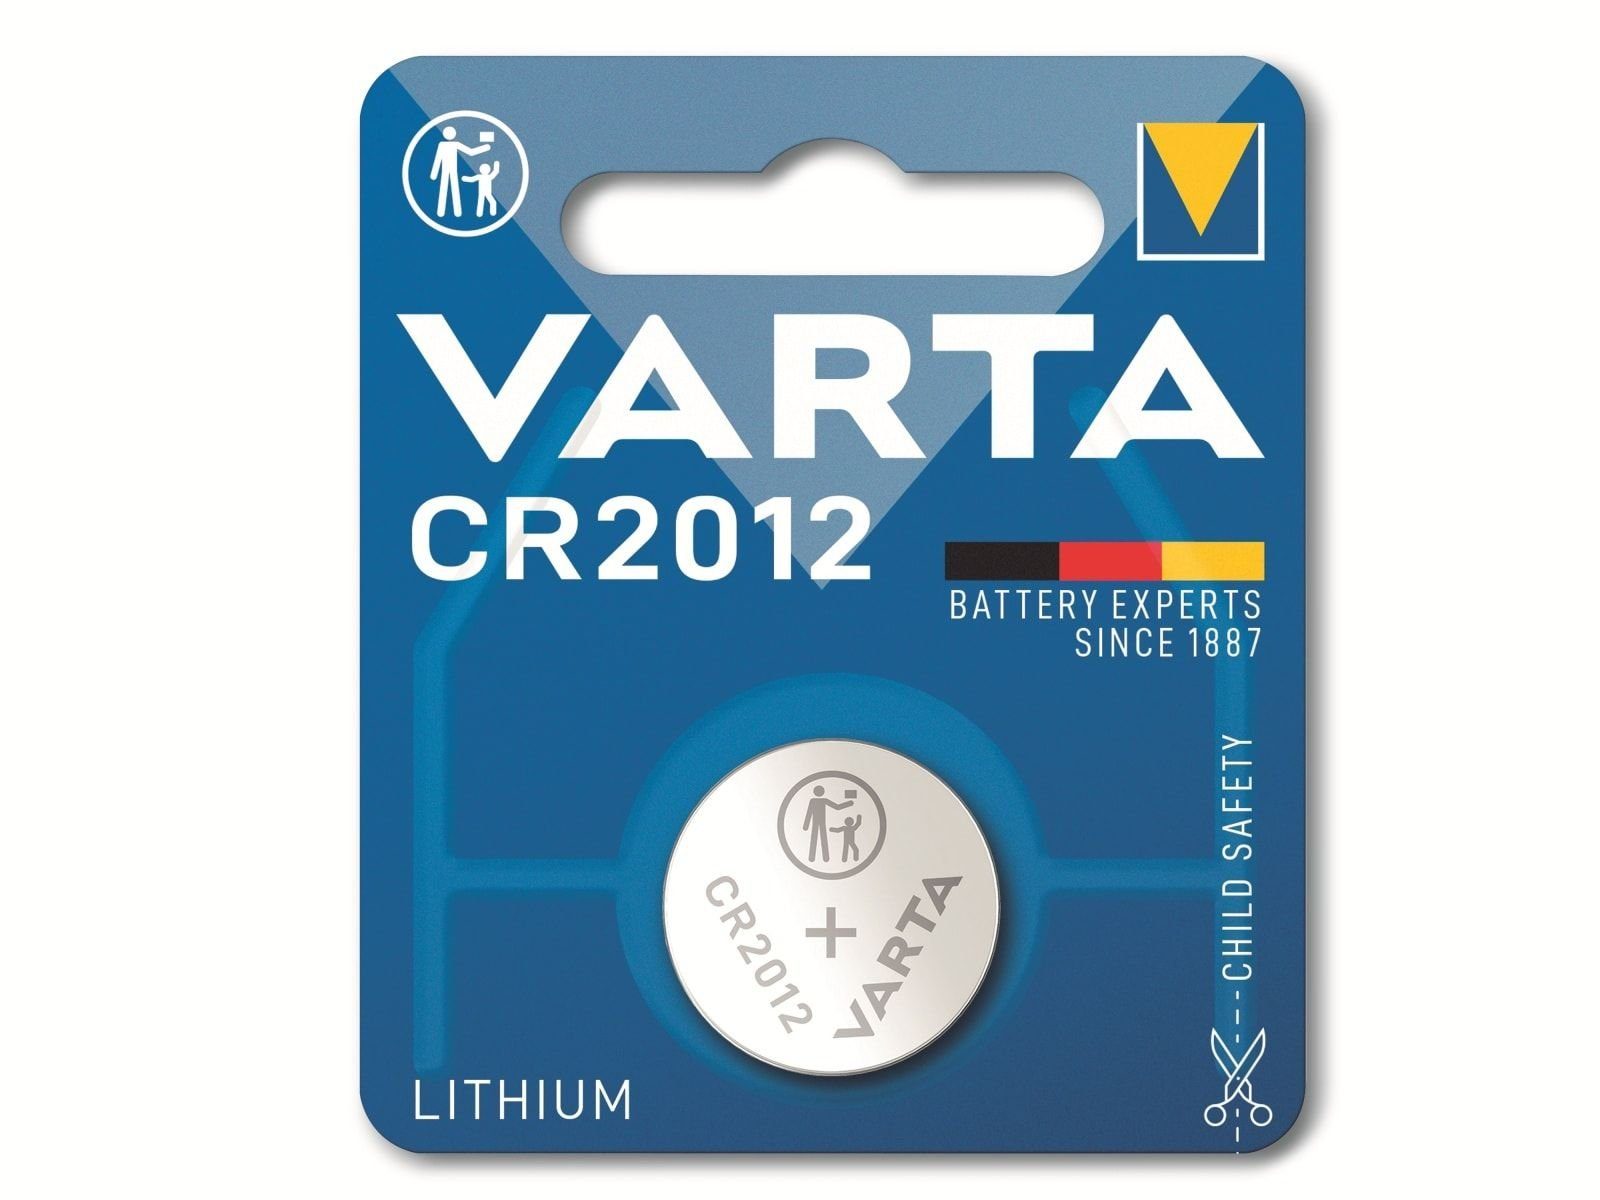 VARTA VARTA Knopfzelle Lithium, 3V 1 CR2012, Stück Knopfzelle